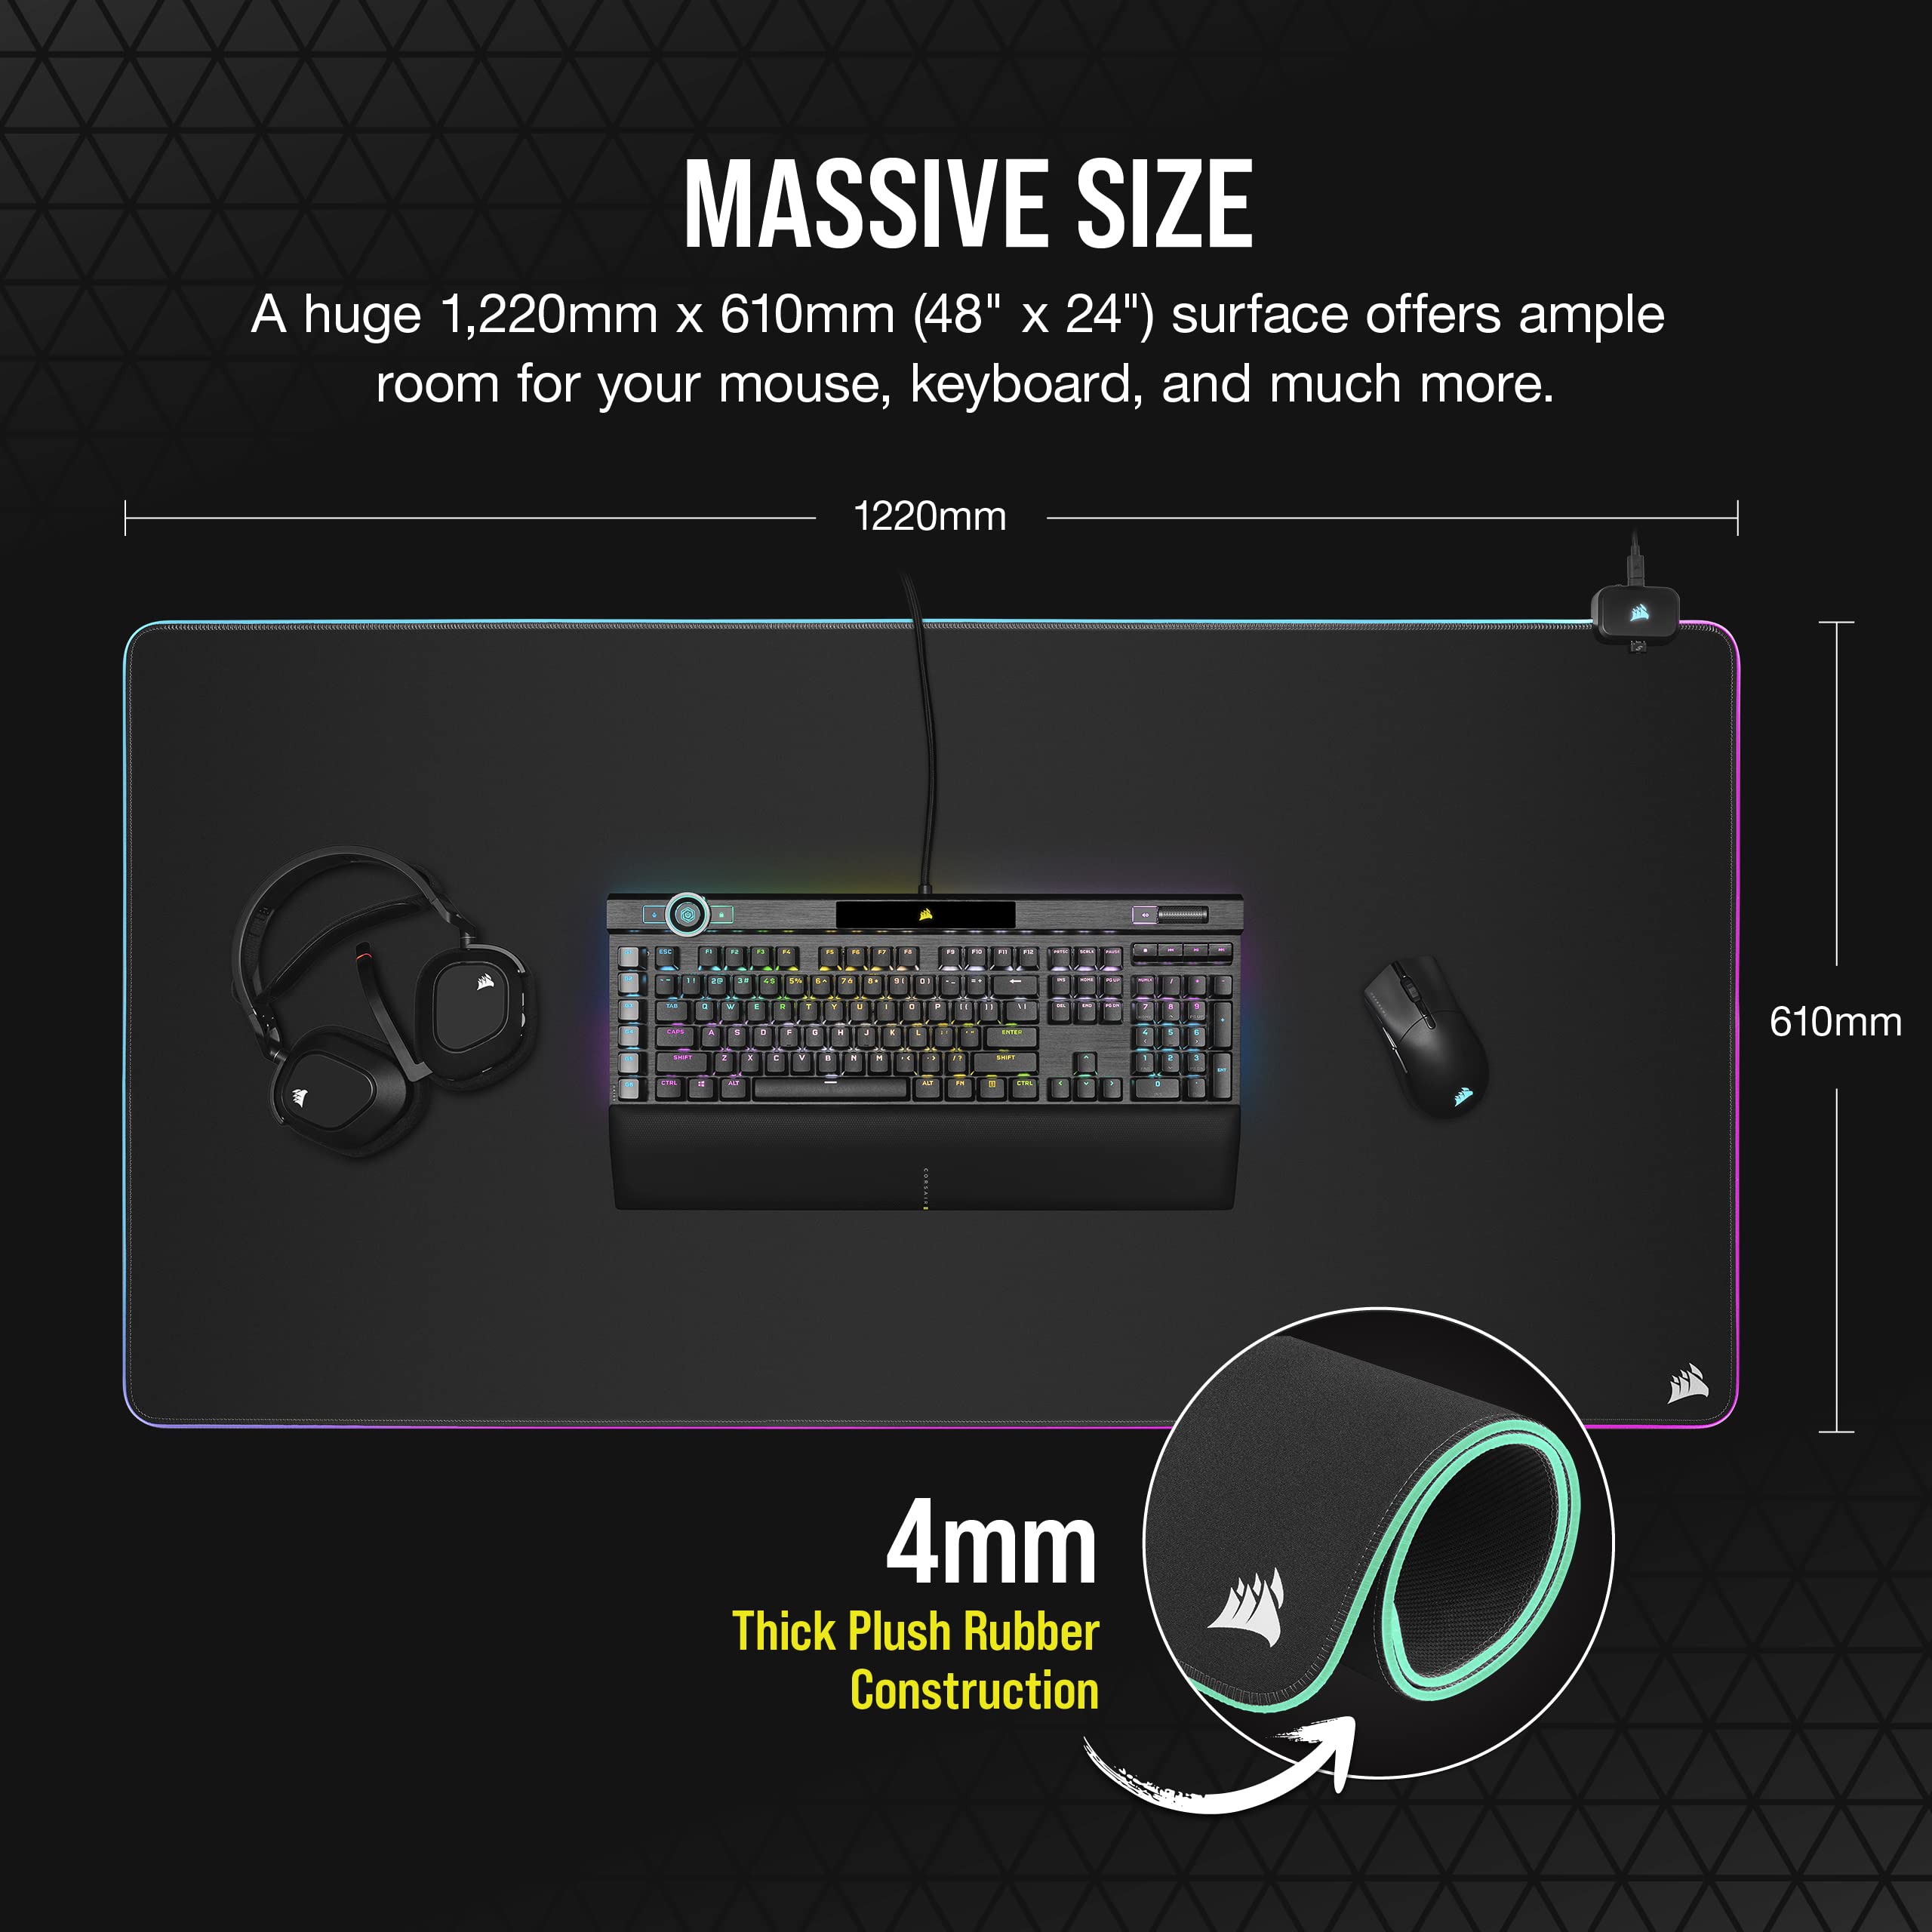 Corsair MM700 RGB Extended 3XL Cloth Gaming Mouse Pad/Desk Mat - Massive 1,220mm x 610mm (48” x 24”) Cloth Surface, 360° Three-Zone RGB Lighting, Two USB Ports - Black